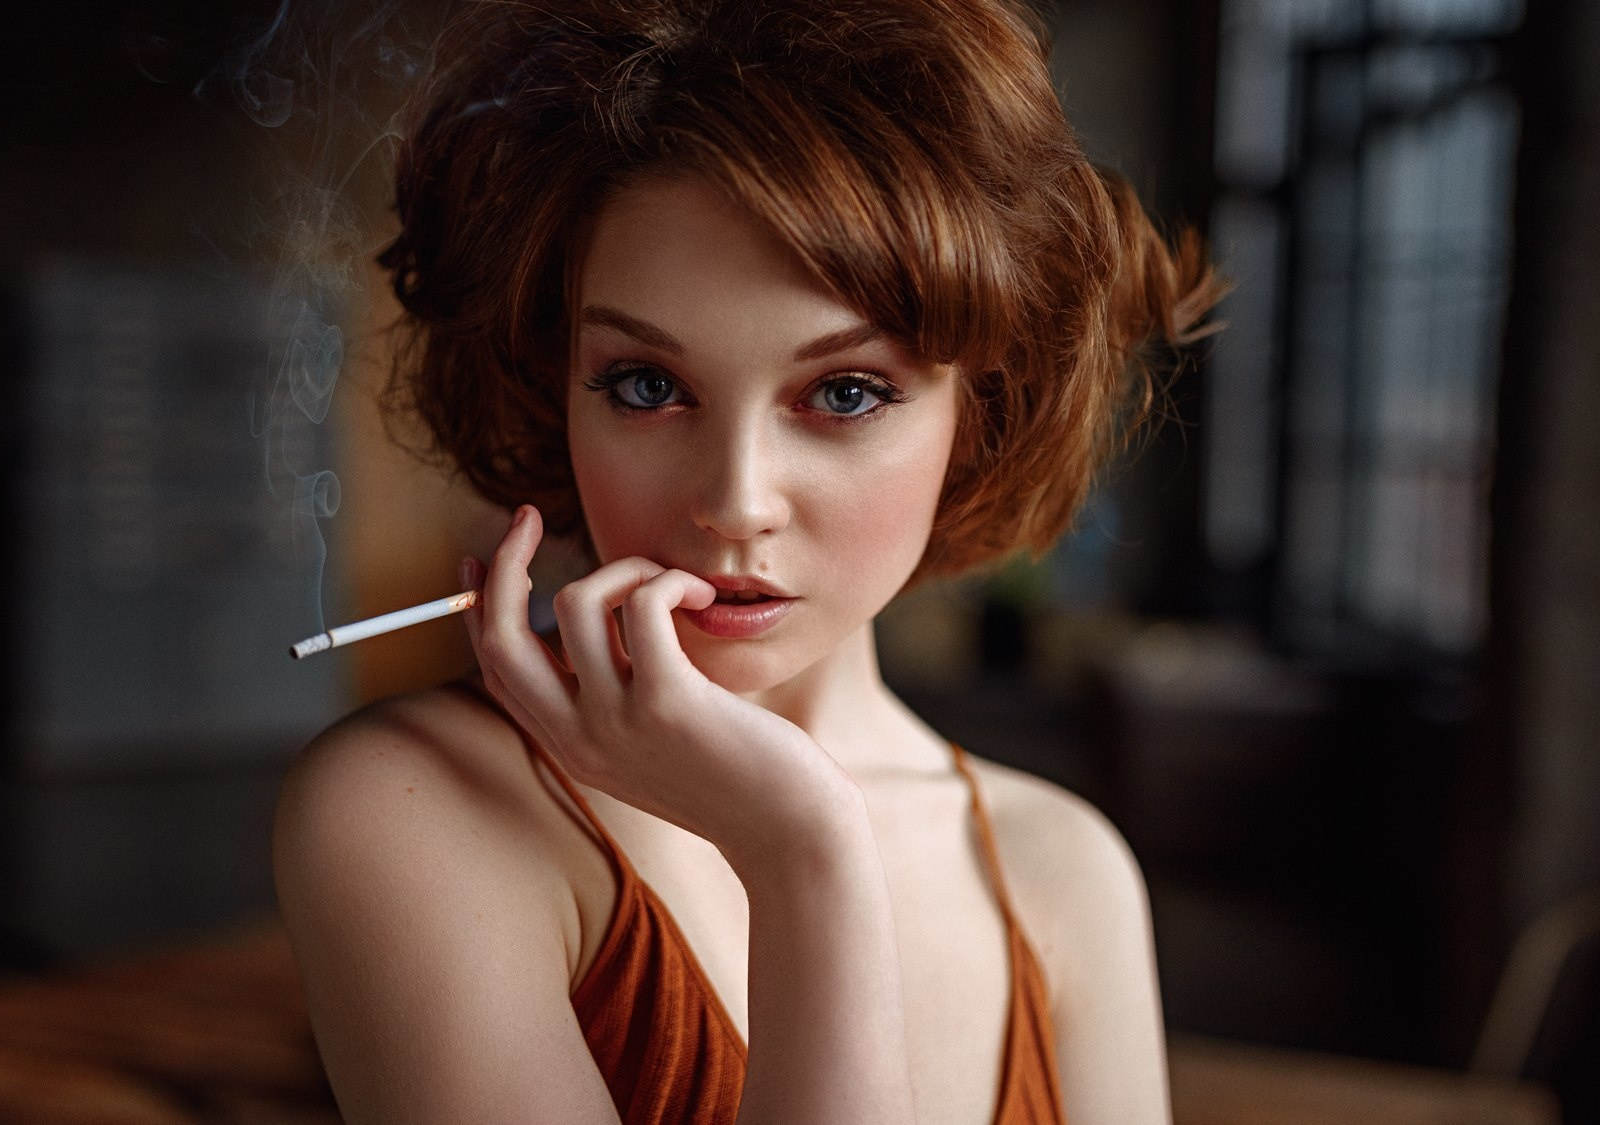 Download Short hair, red head, woman, portrait, cigarette 1600x1200 wallpap...